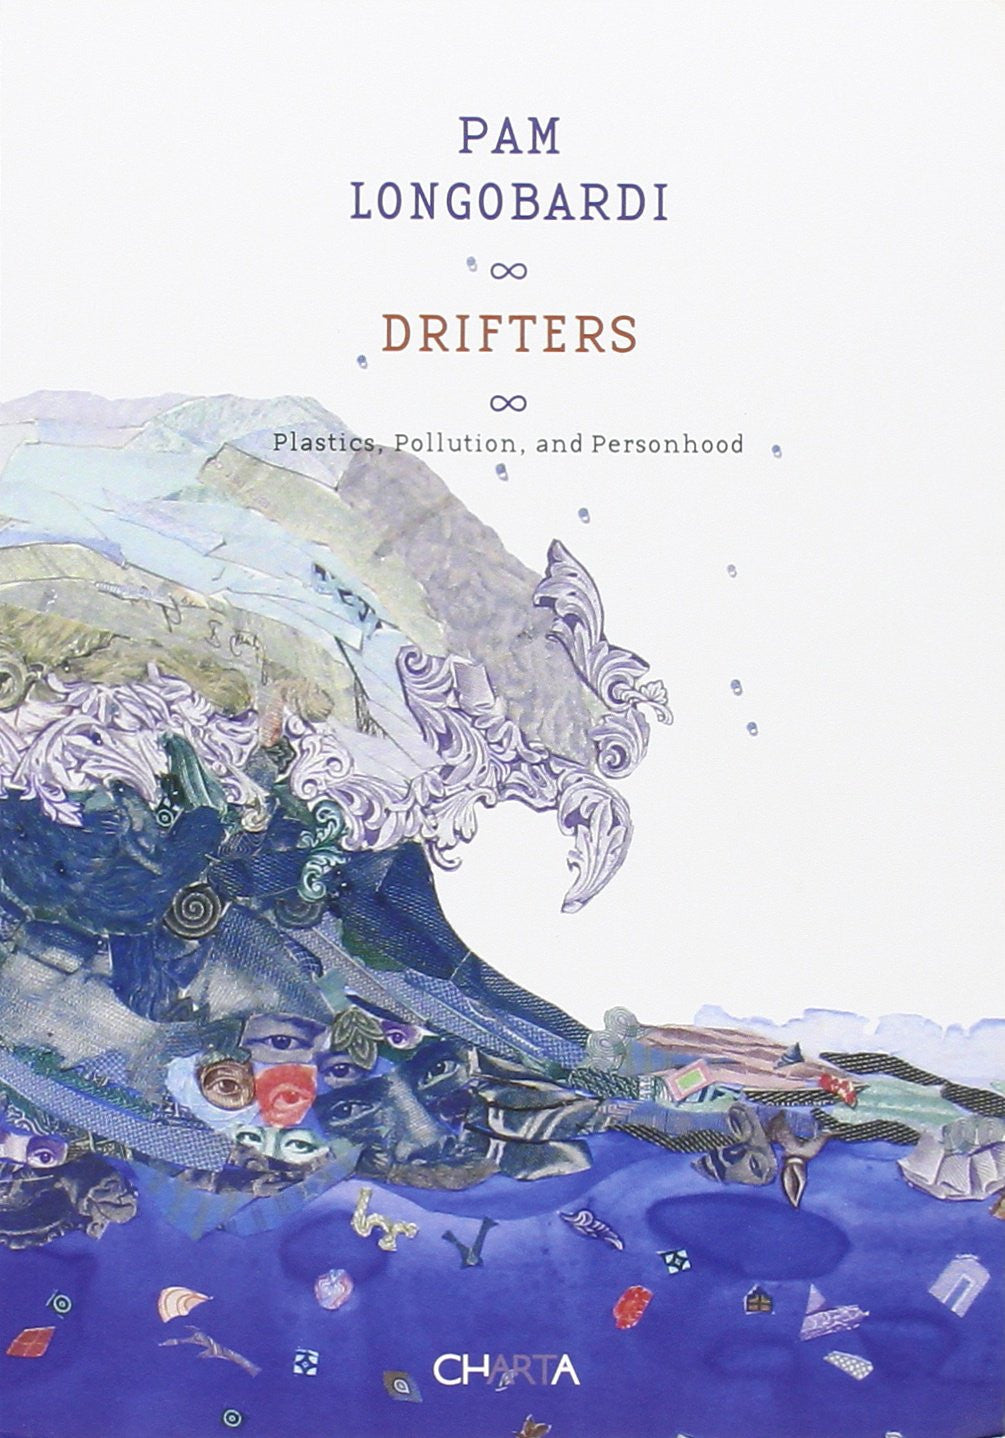 Pam Longobardi, Drifters: Plastics, Pollution, and Personhood by Ron Broglio, Dores Sacquegna, Carl Safina, and Pam Longobardi